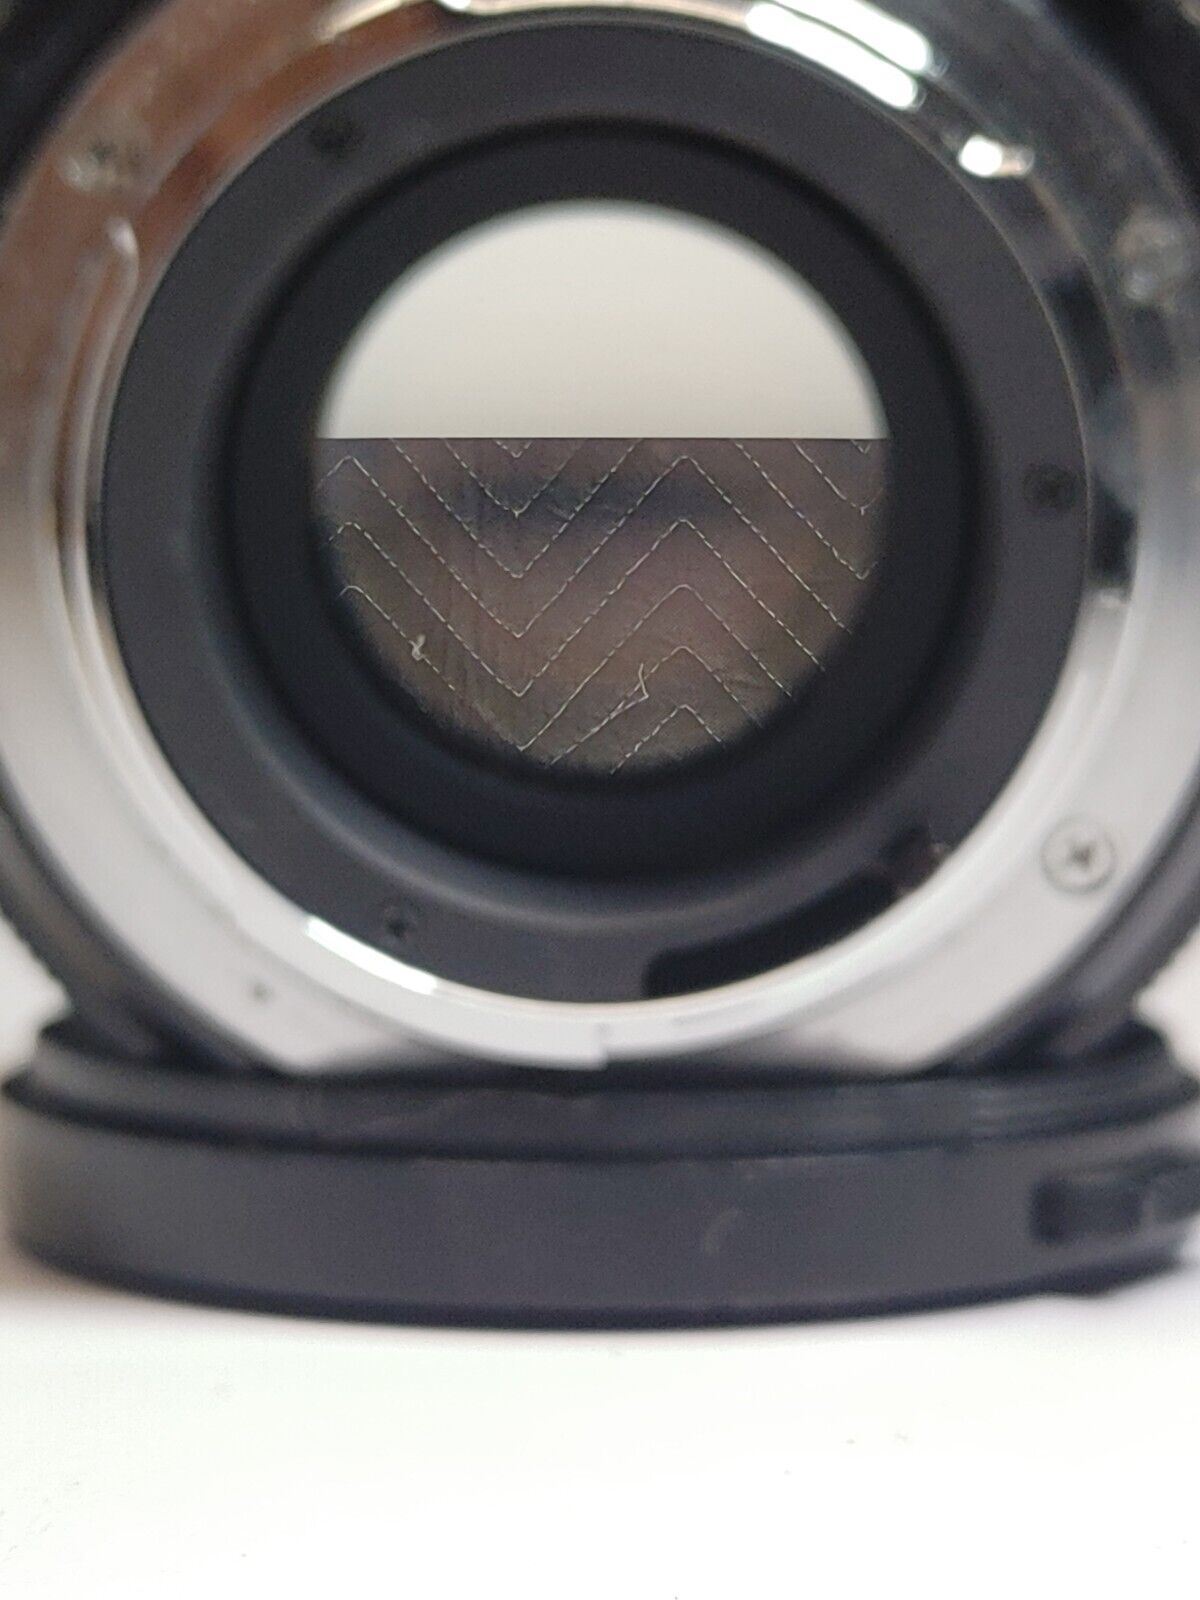 Kiron 28mm f2 Wide Angle Manual Focus Lens for Minolta MC w/ Caps Kino Precision